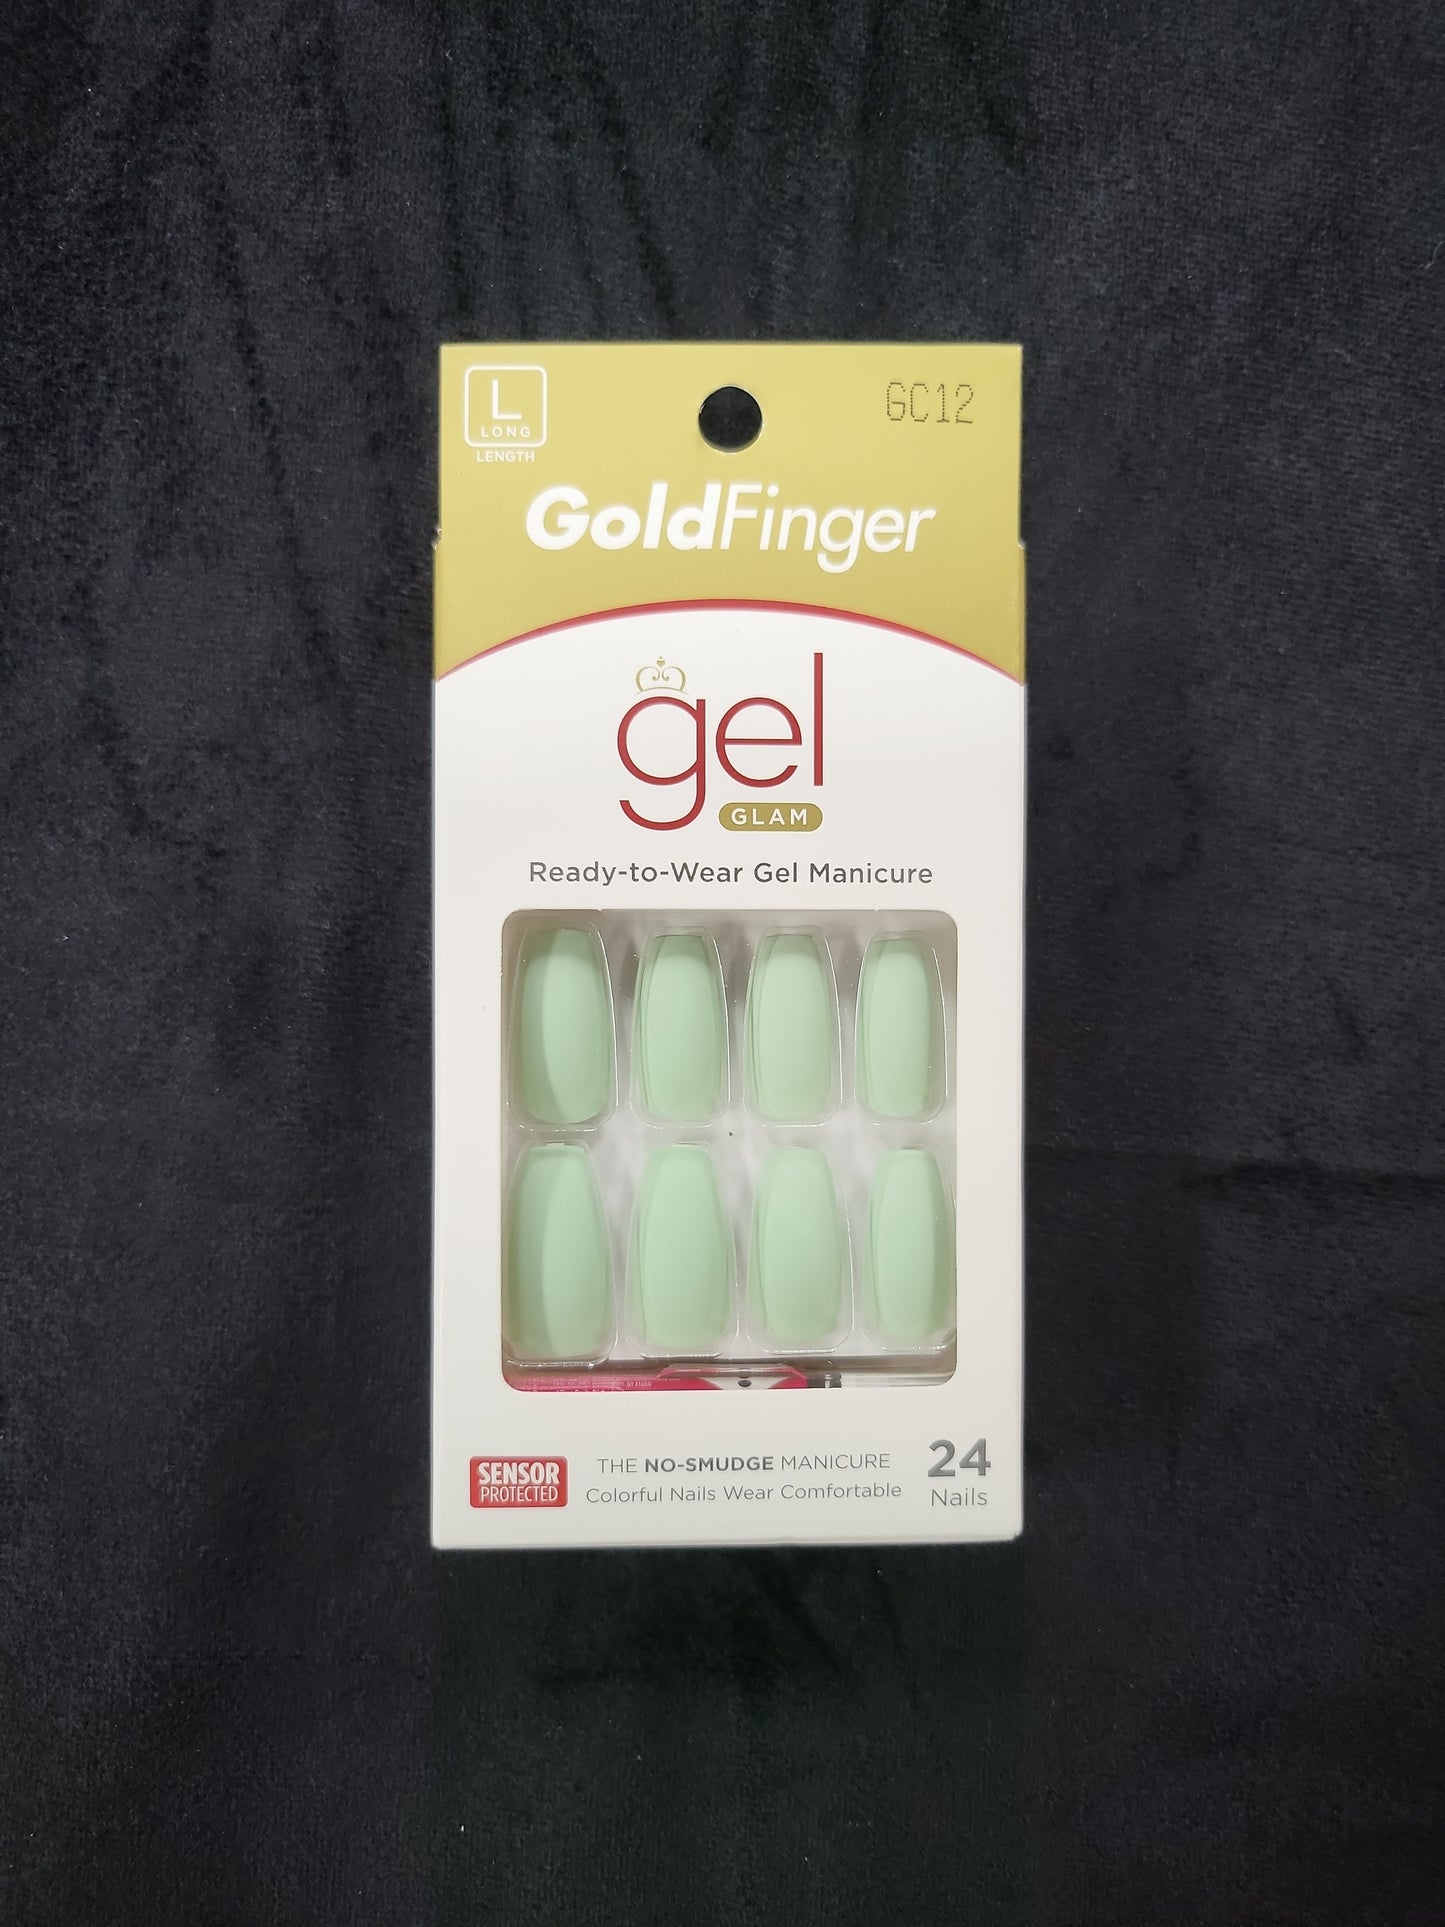 GoldFinger Gel Glam GC12